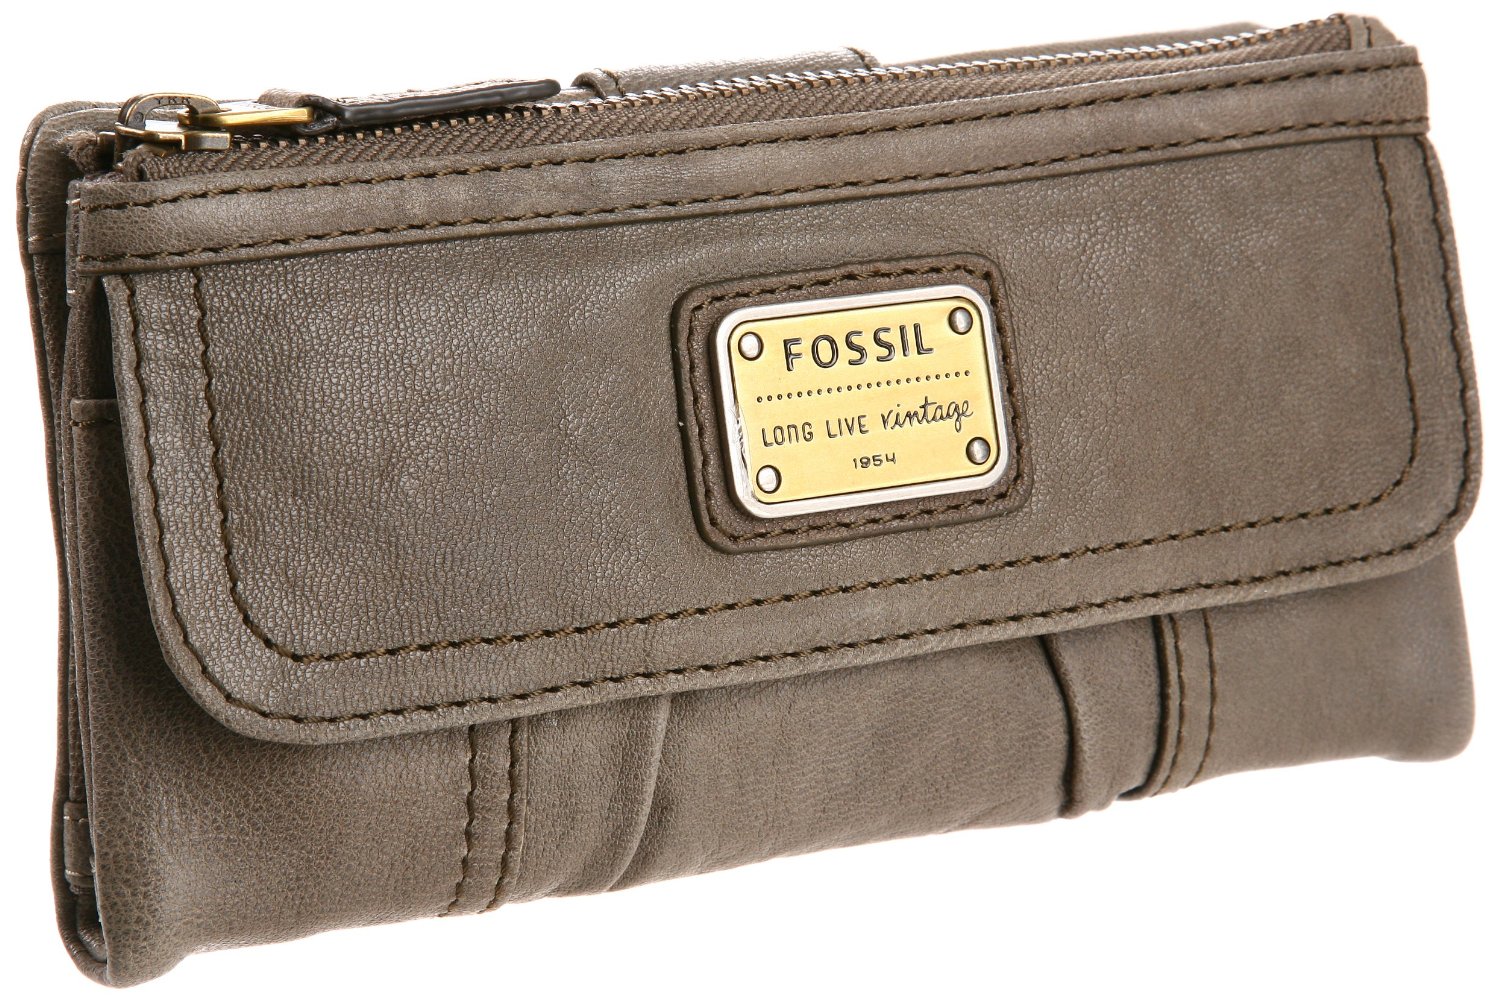 Fossil Emory Clutch Wallet in Gray (ash grey) | Lyst